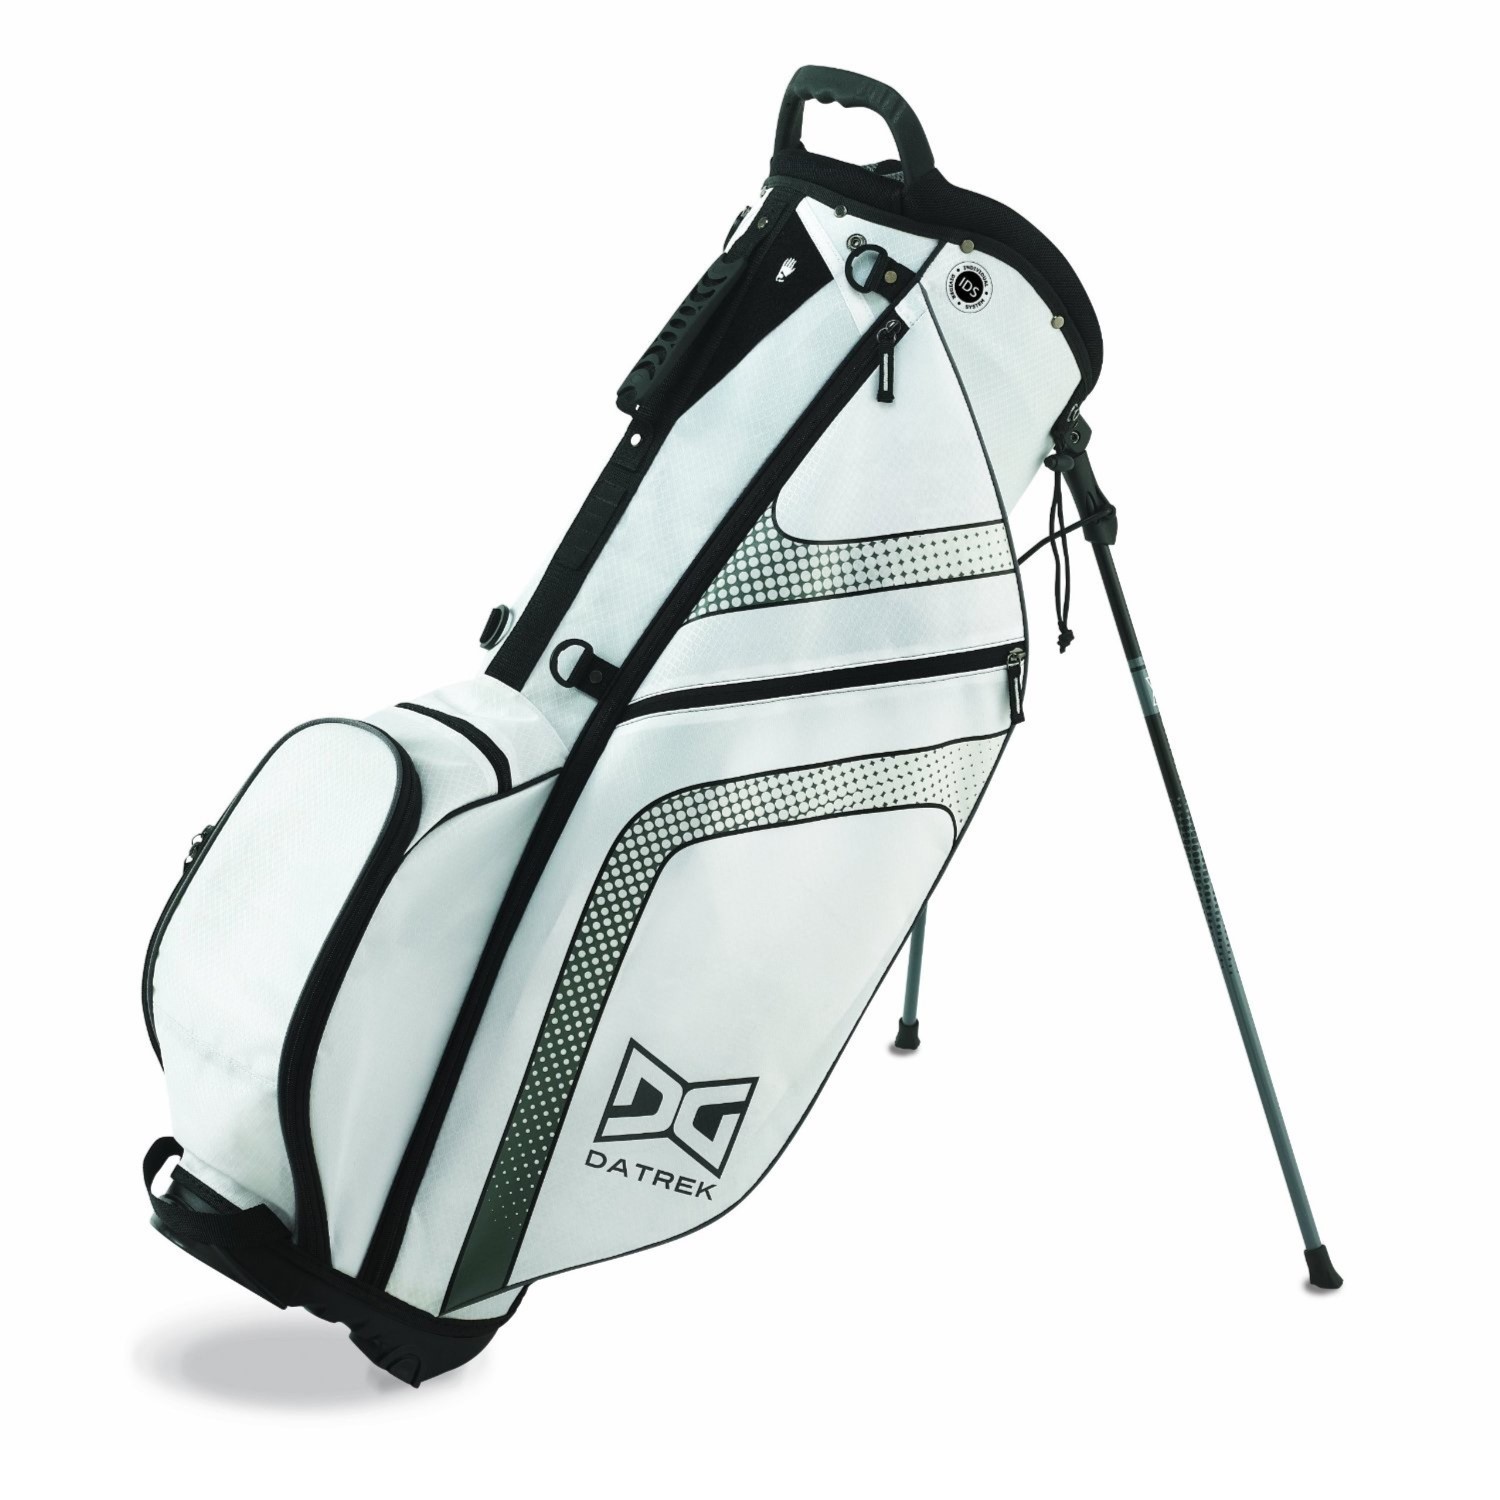 Bag Boy Datrek Go-Lite 14 Organizer Stand Golf  White/Charcoal/Black